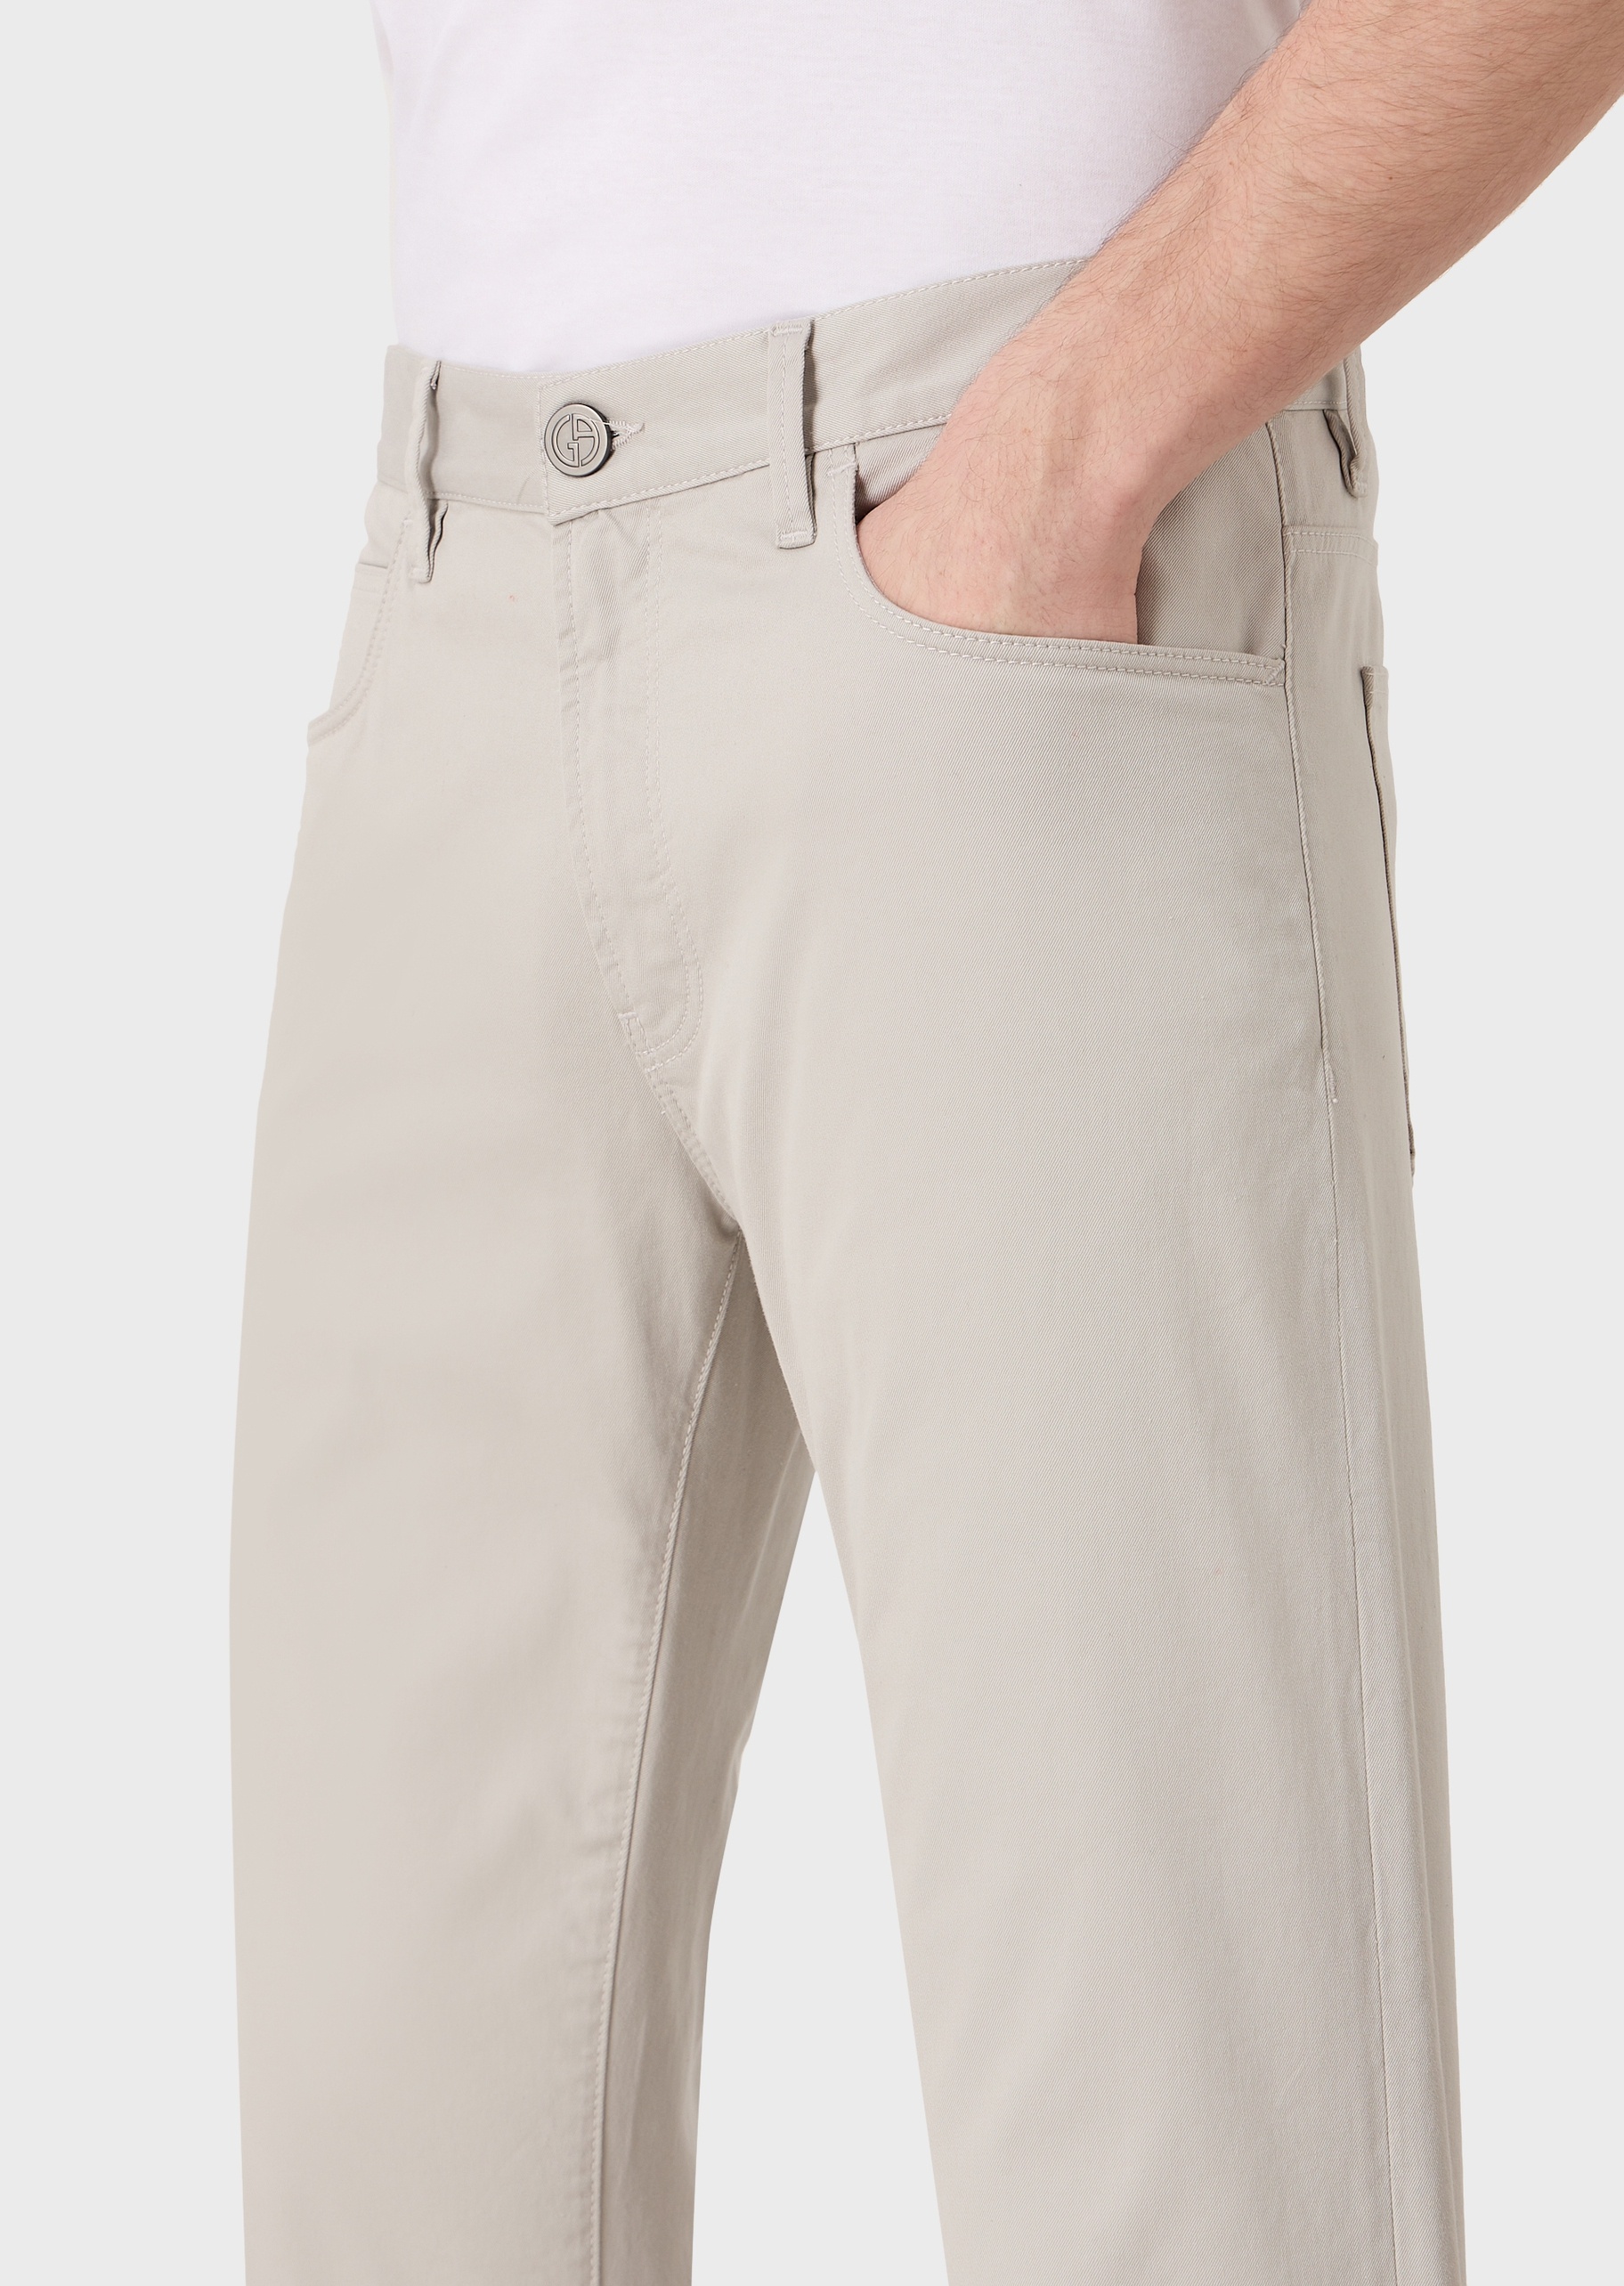 Giorgio Armani 男士休闲纯色中腰宽松直筒微弹牛仔裤